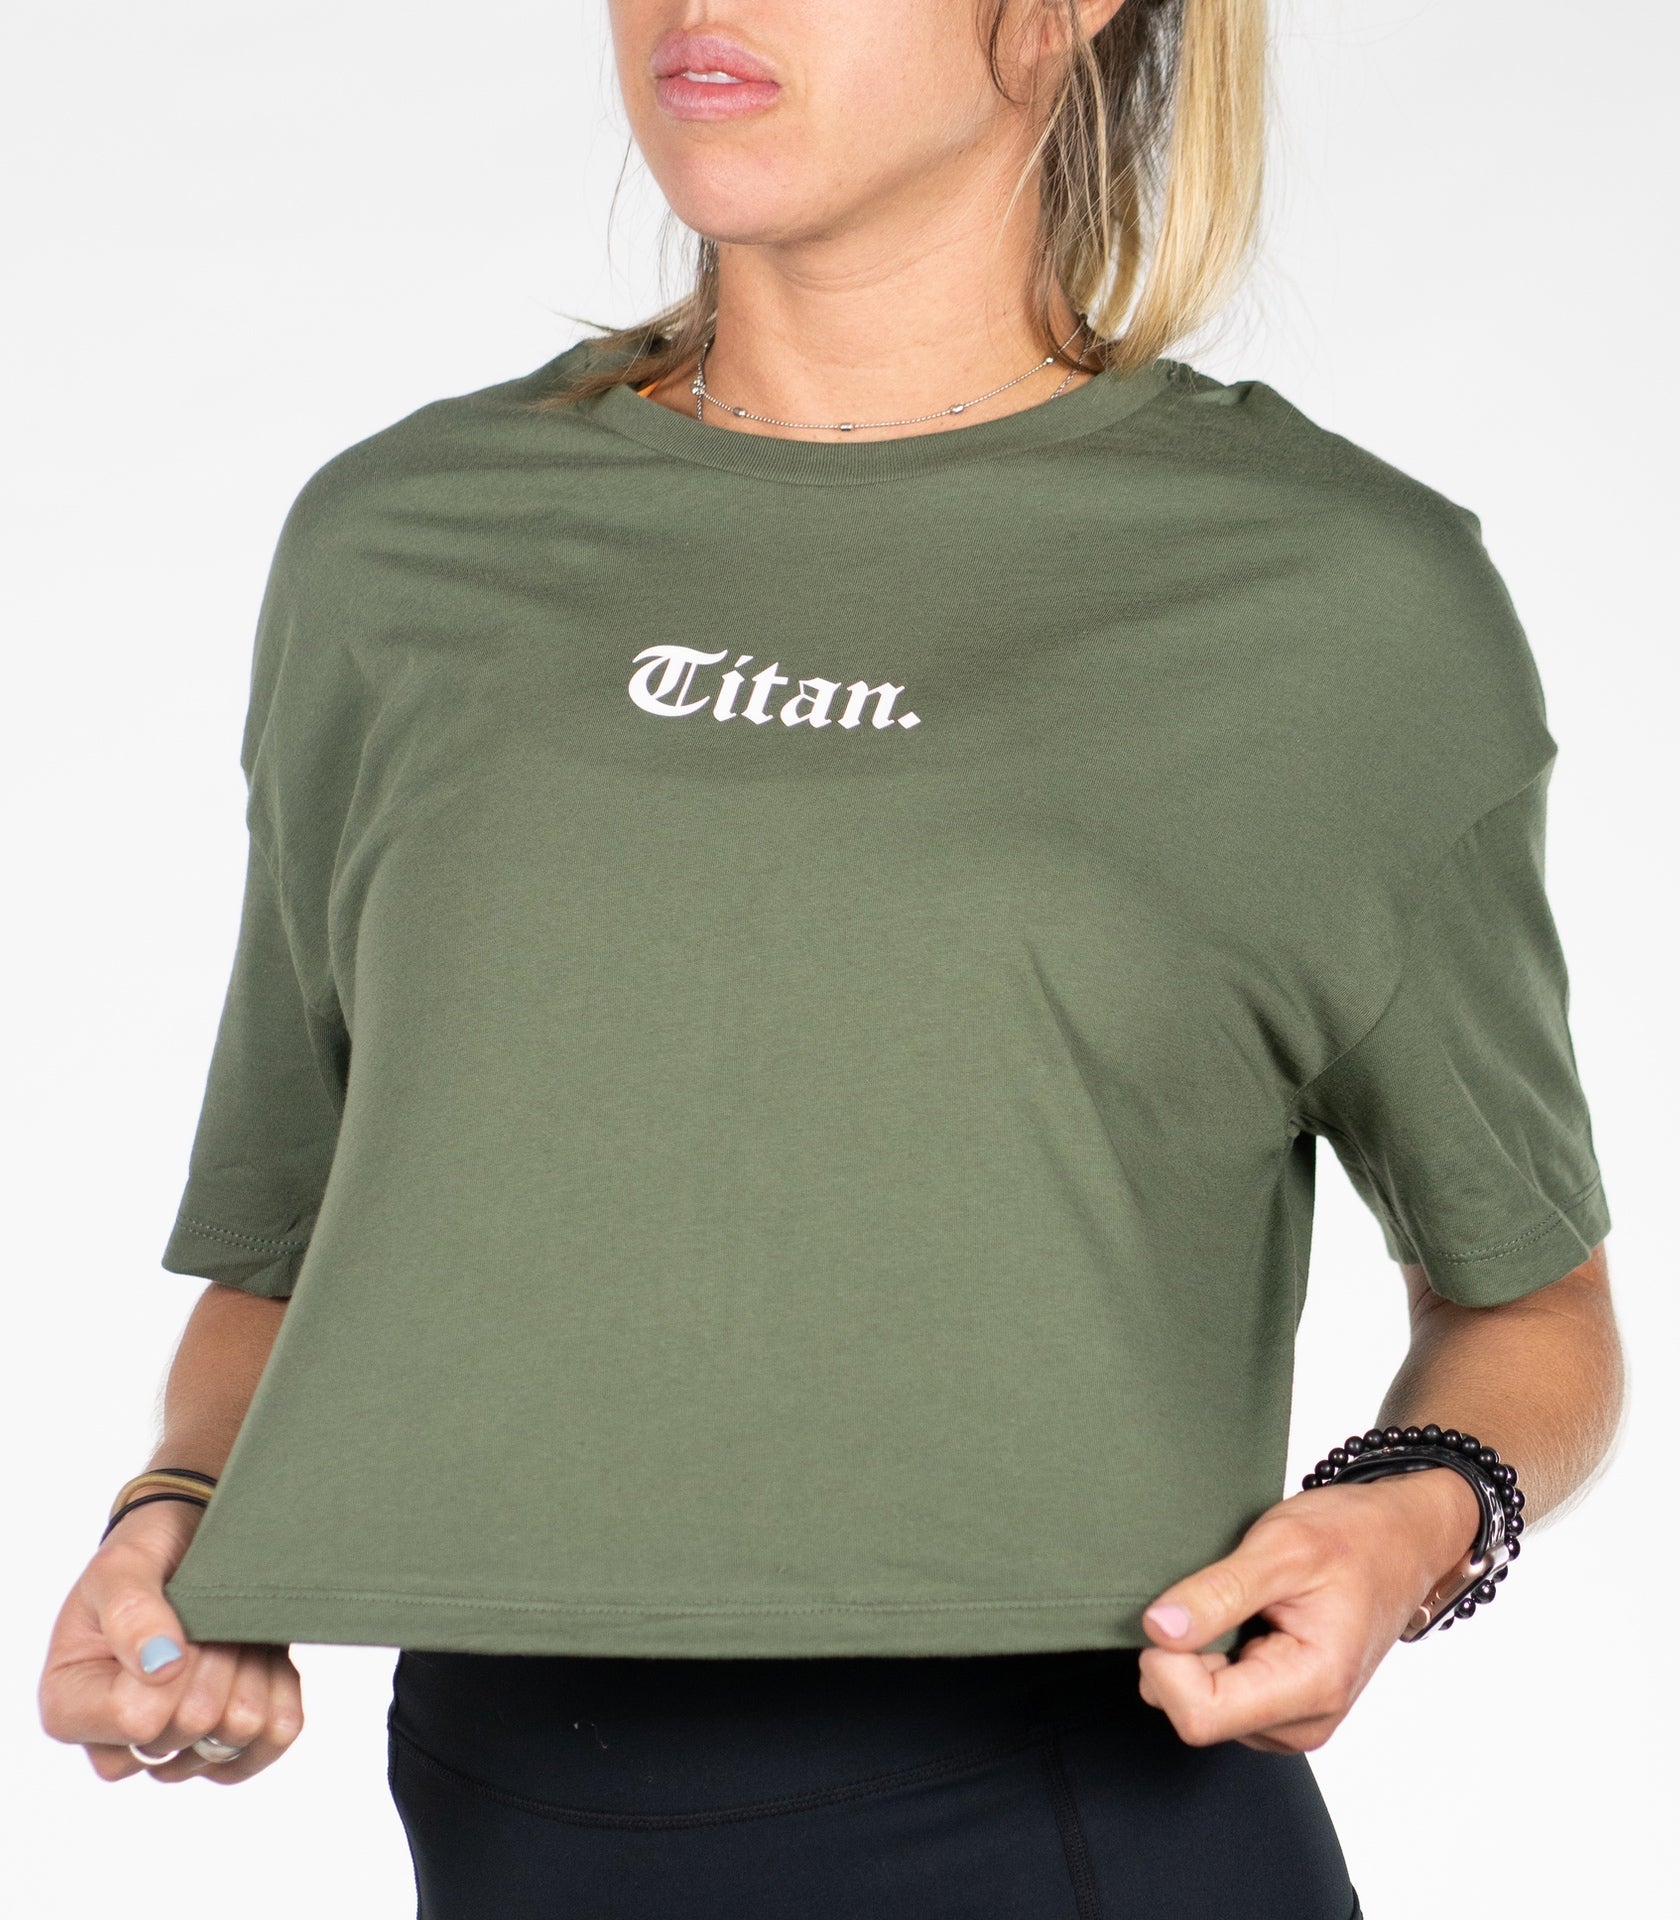 Statement Cropped Tee - Titan